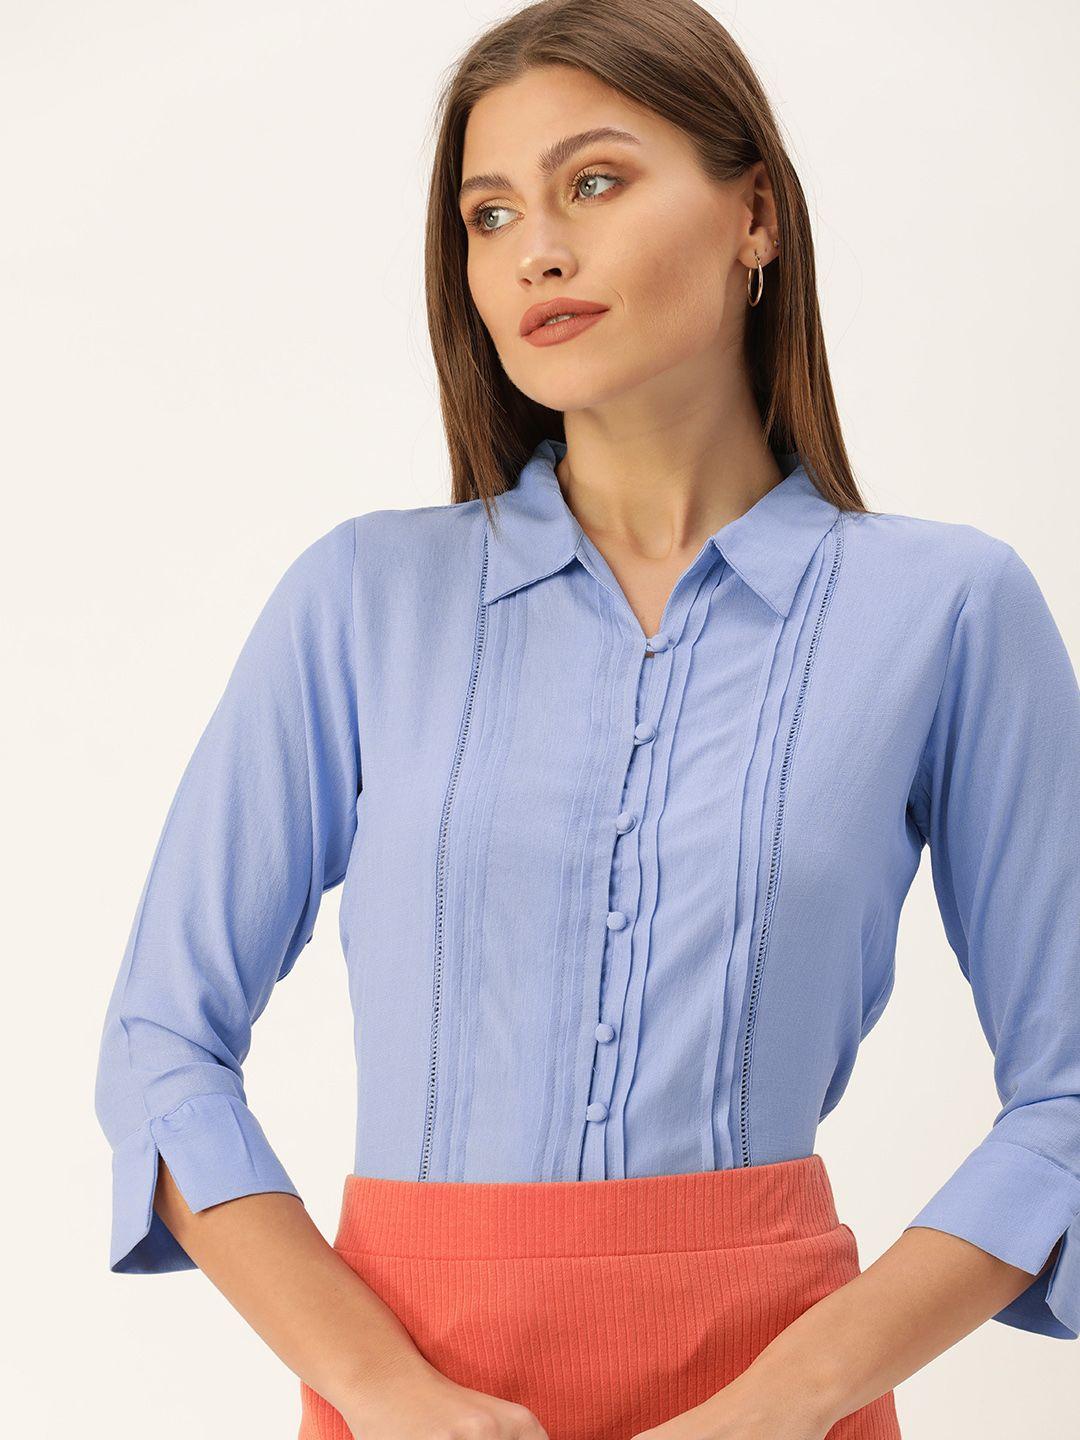 and blue solid shirt collar regular sleeves pin tucks lace shirt style top